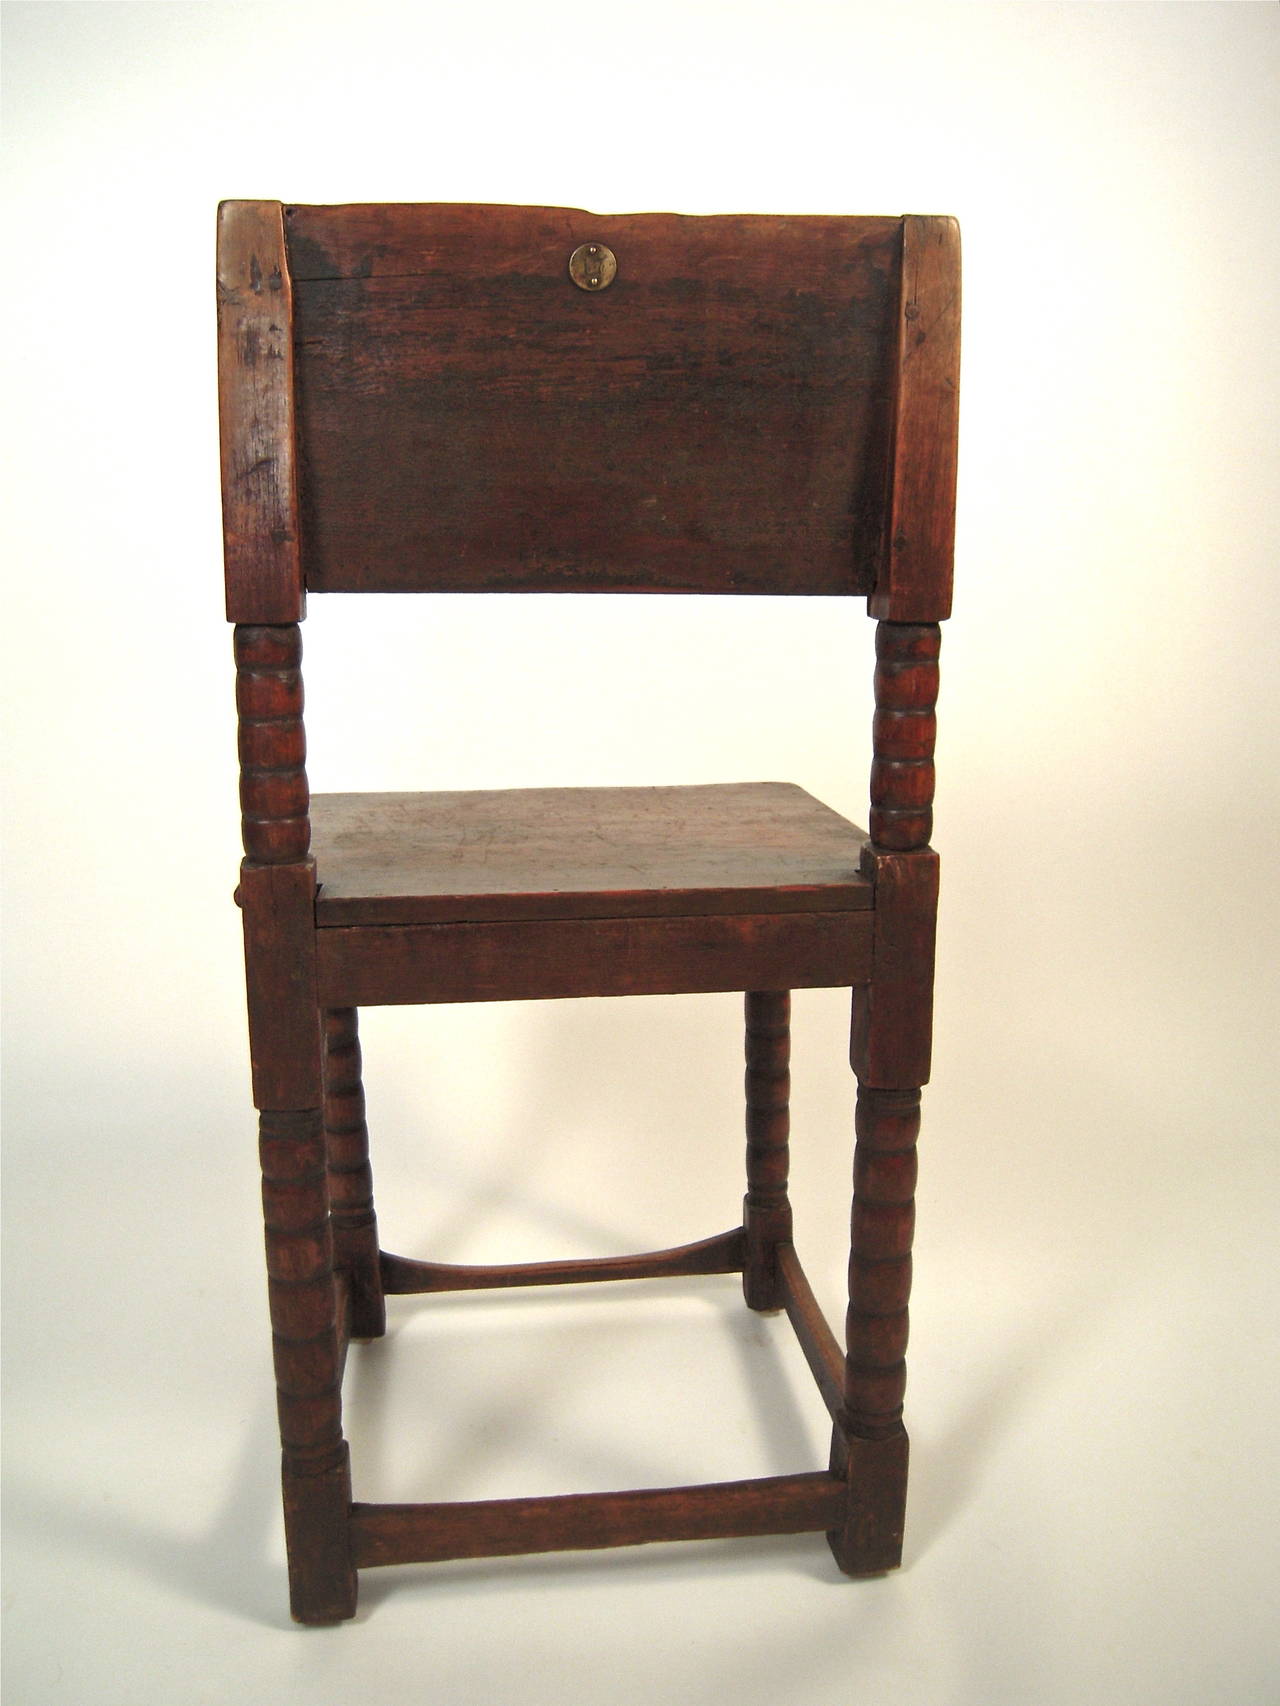 British 17th Century English Cromwellian Chair